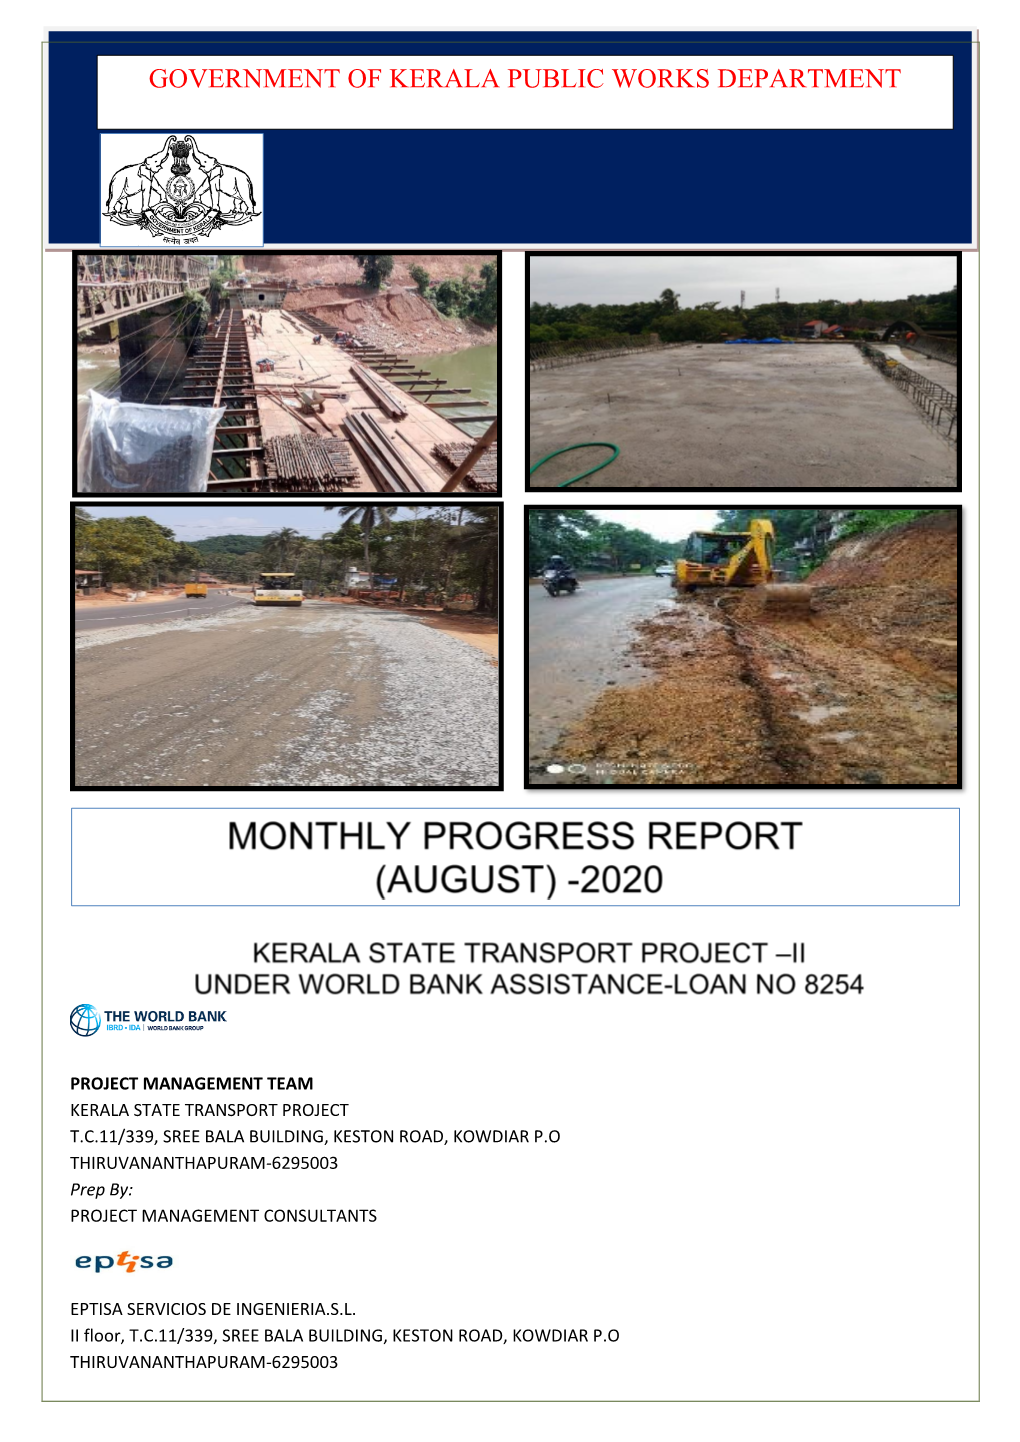 Monthly Progress Report August 2020